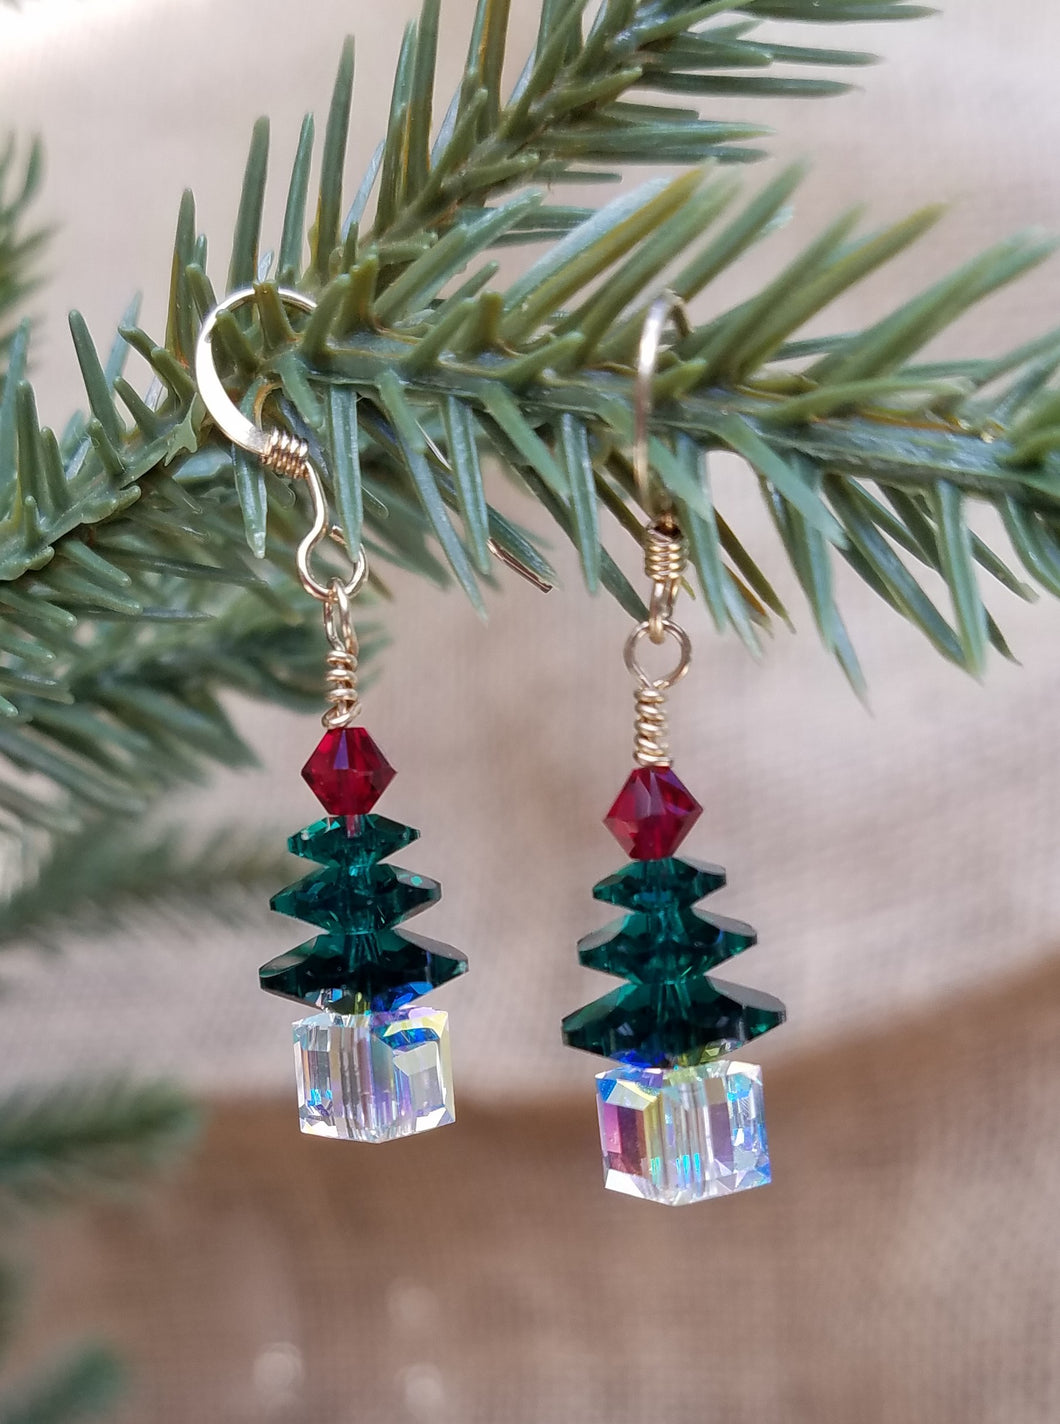 Christmas Trees! Tiny elegance...